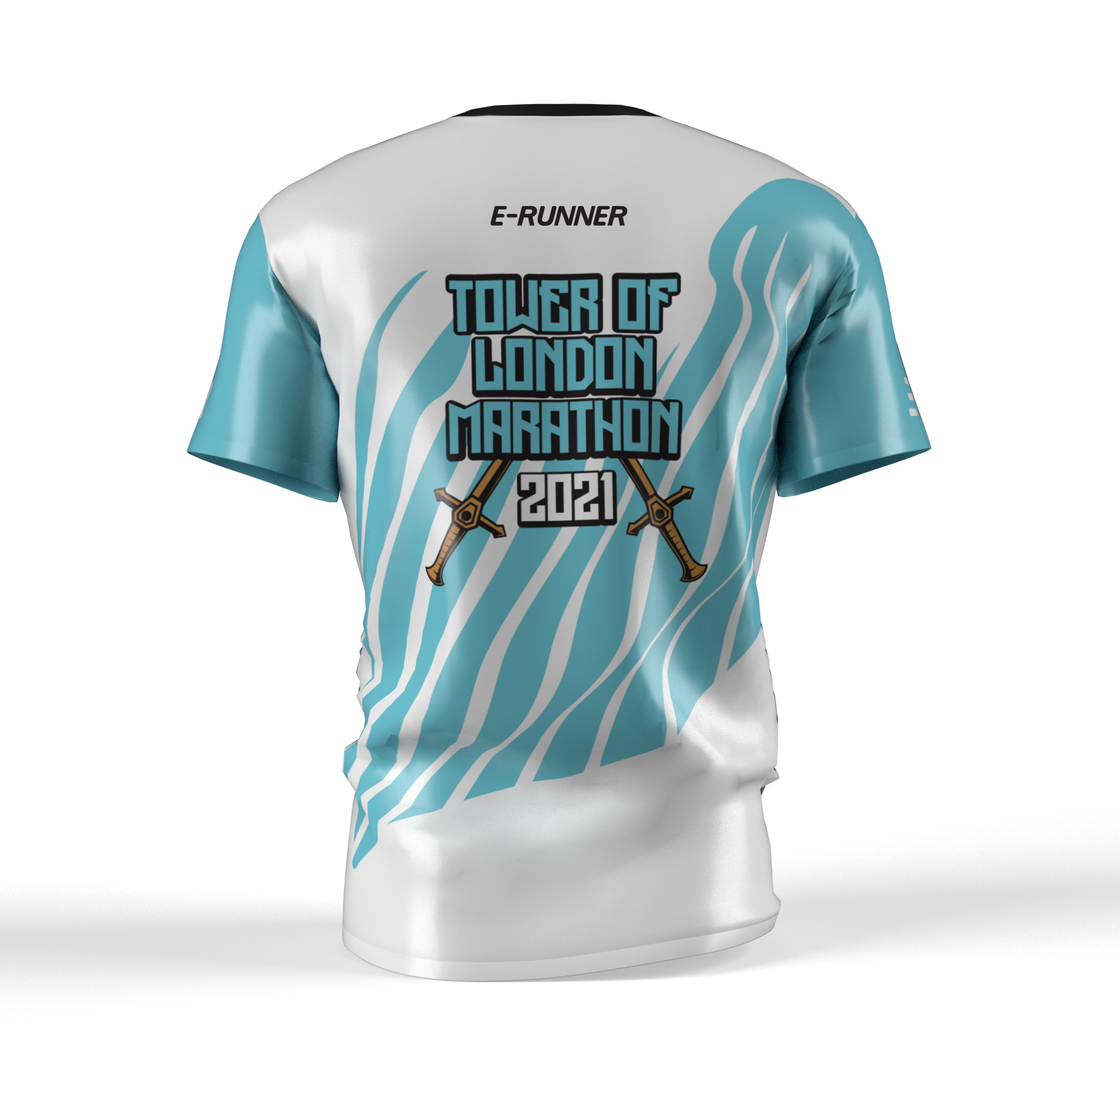 Tower of London Marathon T-Shirt